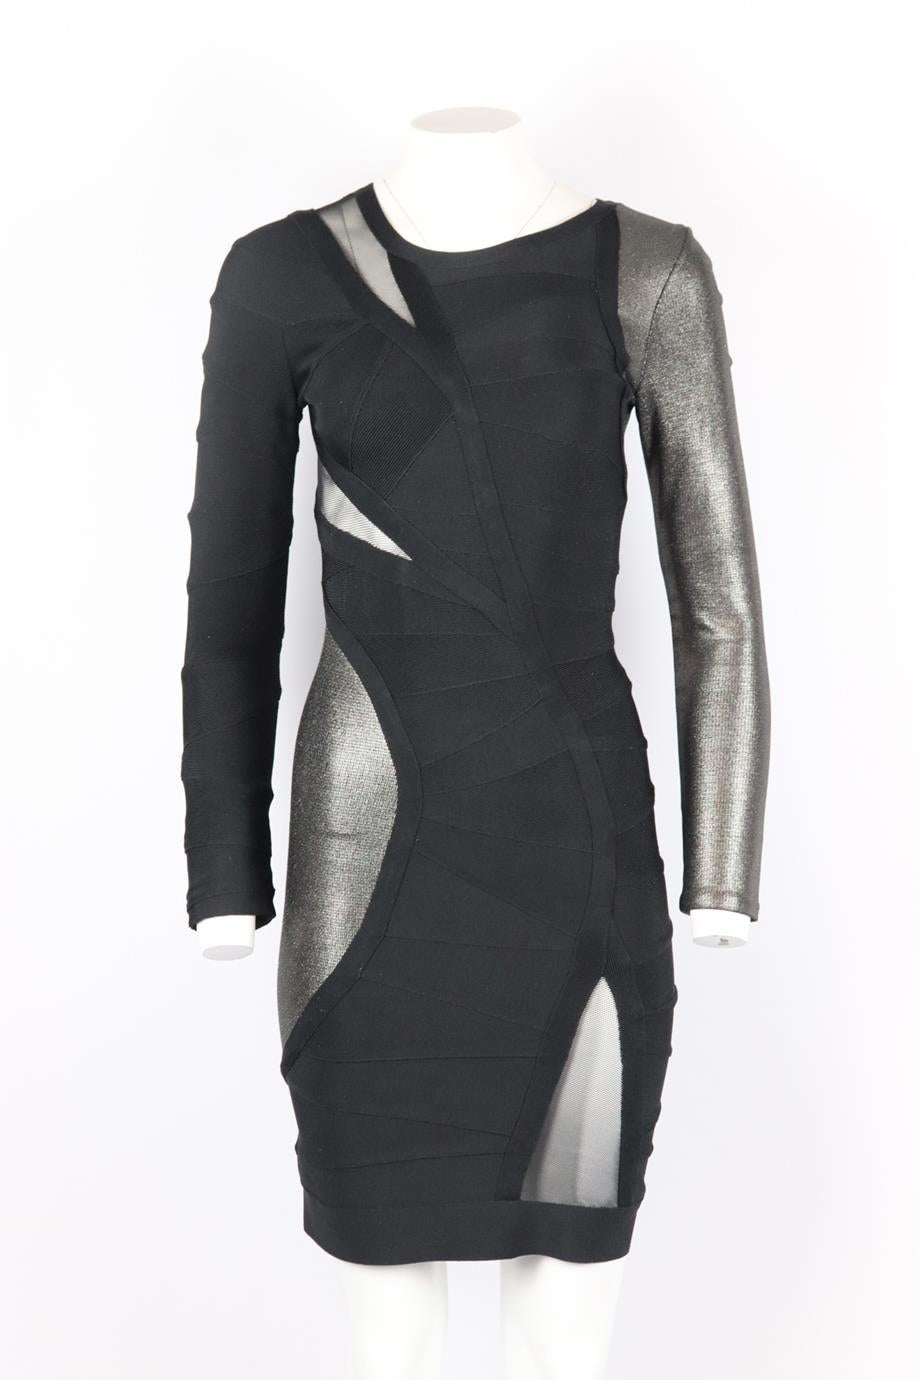 Herve Leger mesh paneled bandage mini dress. Black and silver. Long sleeve, crewneck. Zip fastening at back. 90% Rayon, 9% nylon, 1% spandex; fabric2: 65% rayon, 30% nylon, 5% spandex. Size: Small (UK 8, US 4, FR 36, IT 40). Bust: 31 in. Waist: 24